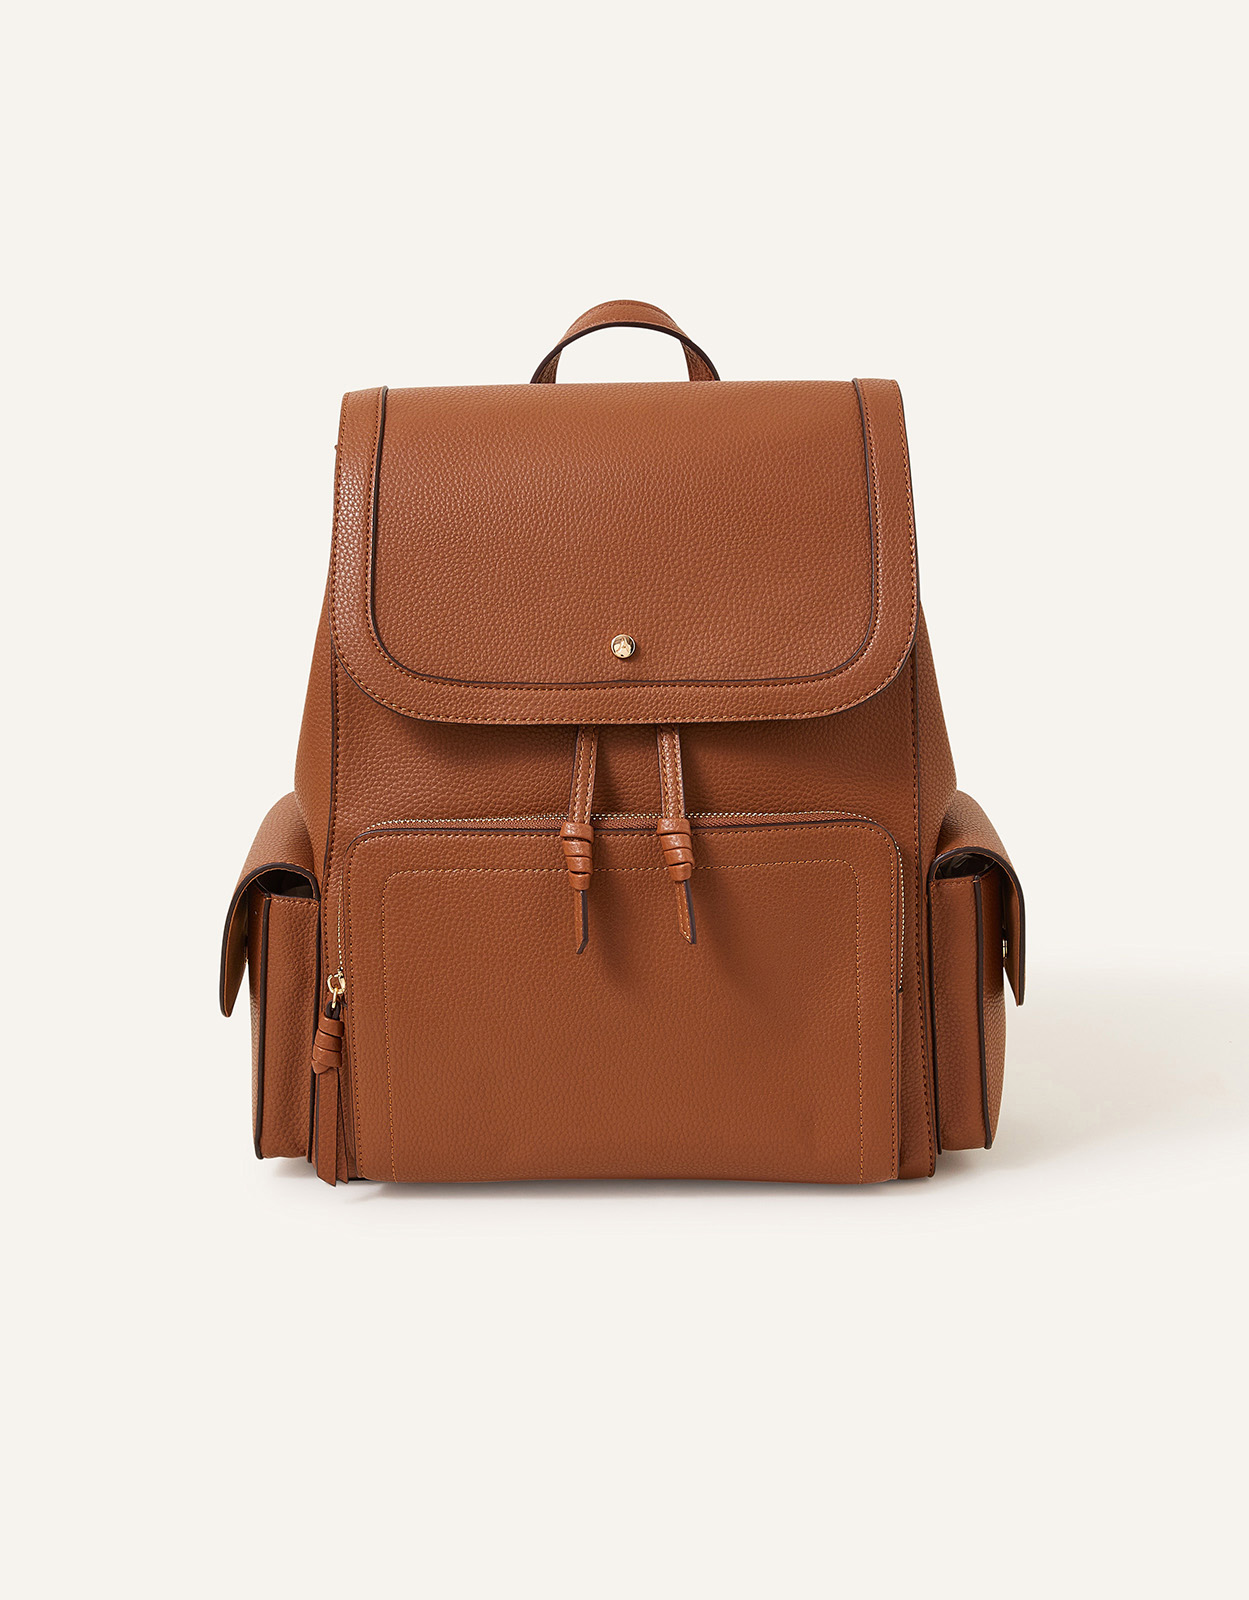 Accessorize Tan Brown Multi Pocket Laptop Backpack, Size: 35x29cm